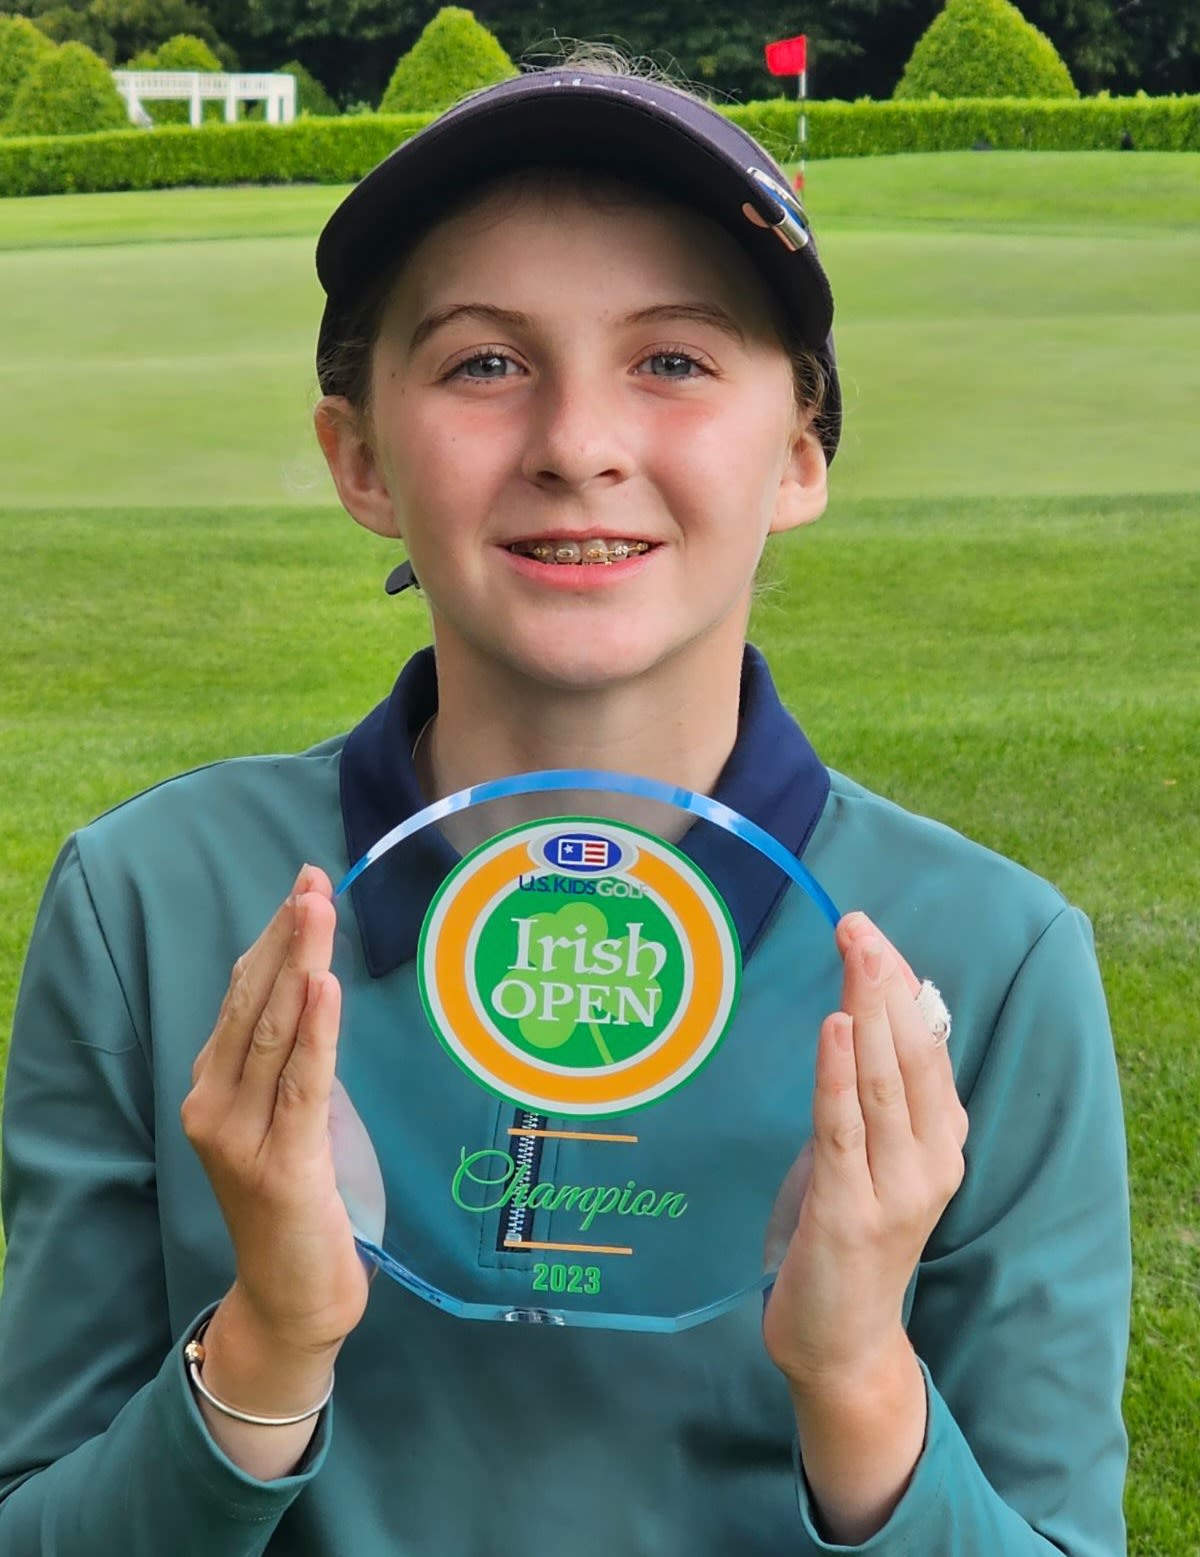 Ryley following her win at the 2023 U.S. Kids Golf Irish Open. 